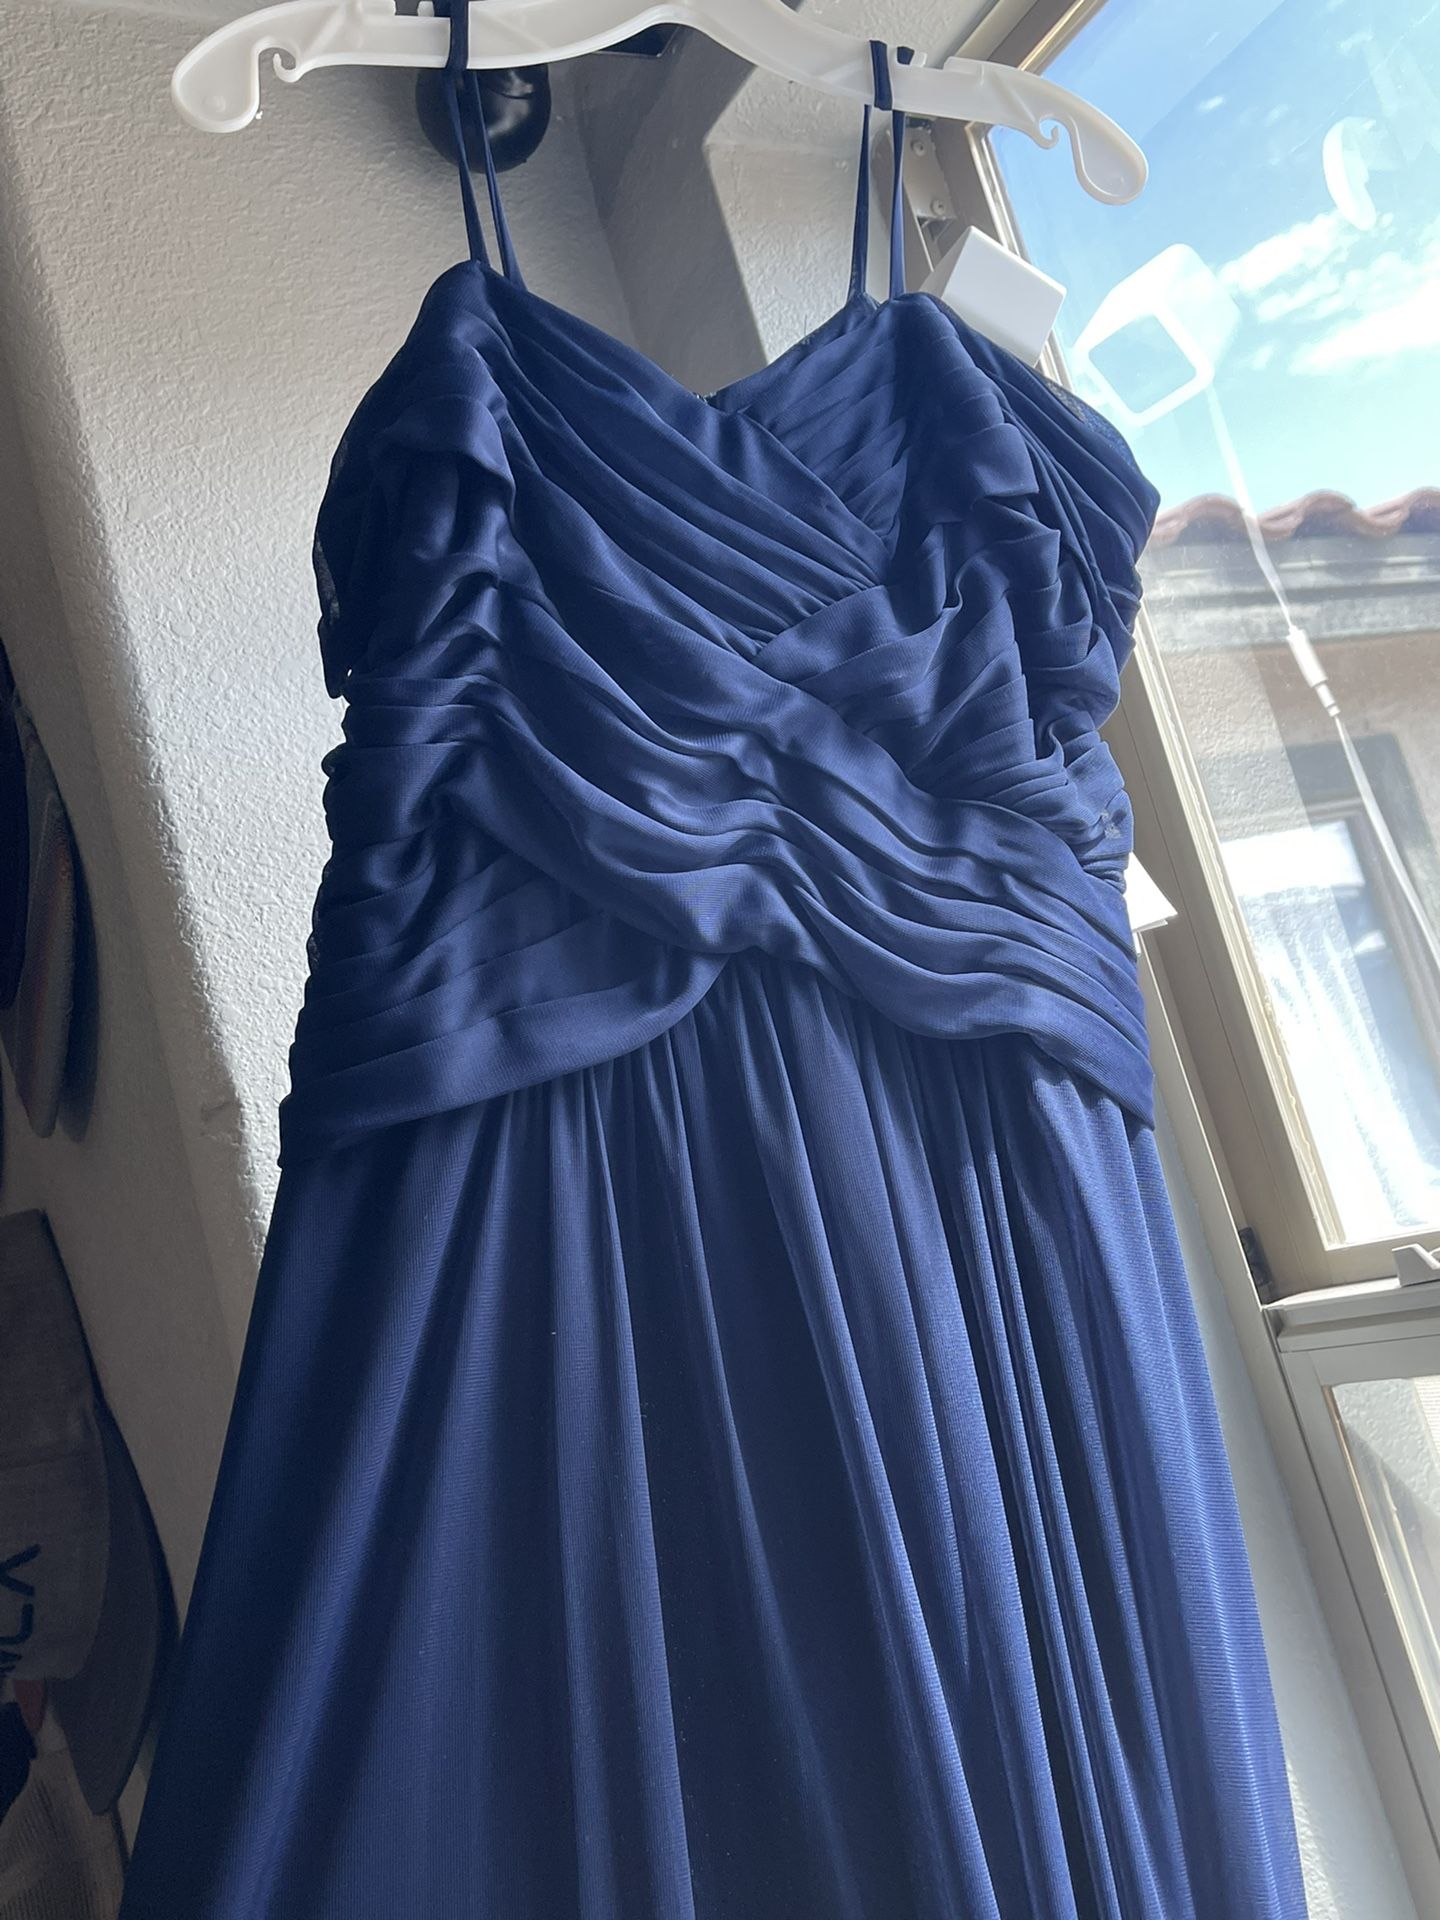 Jr Bridesmaid Dress Navy Blue 